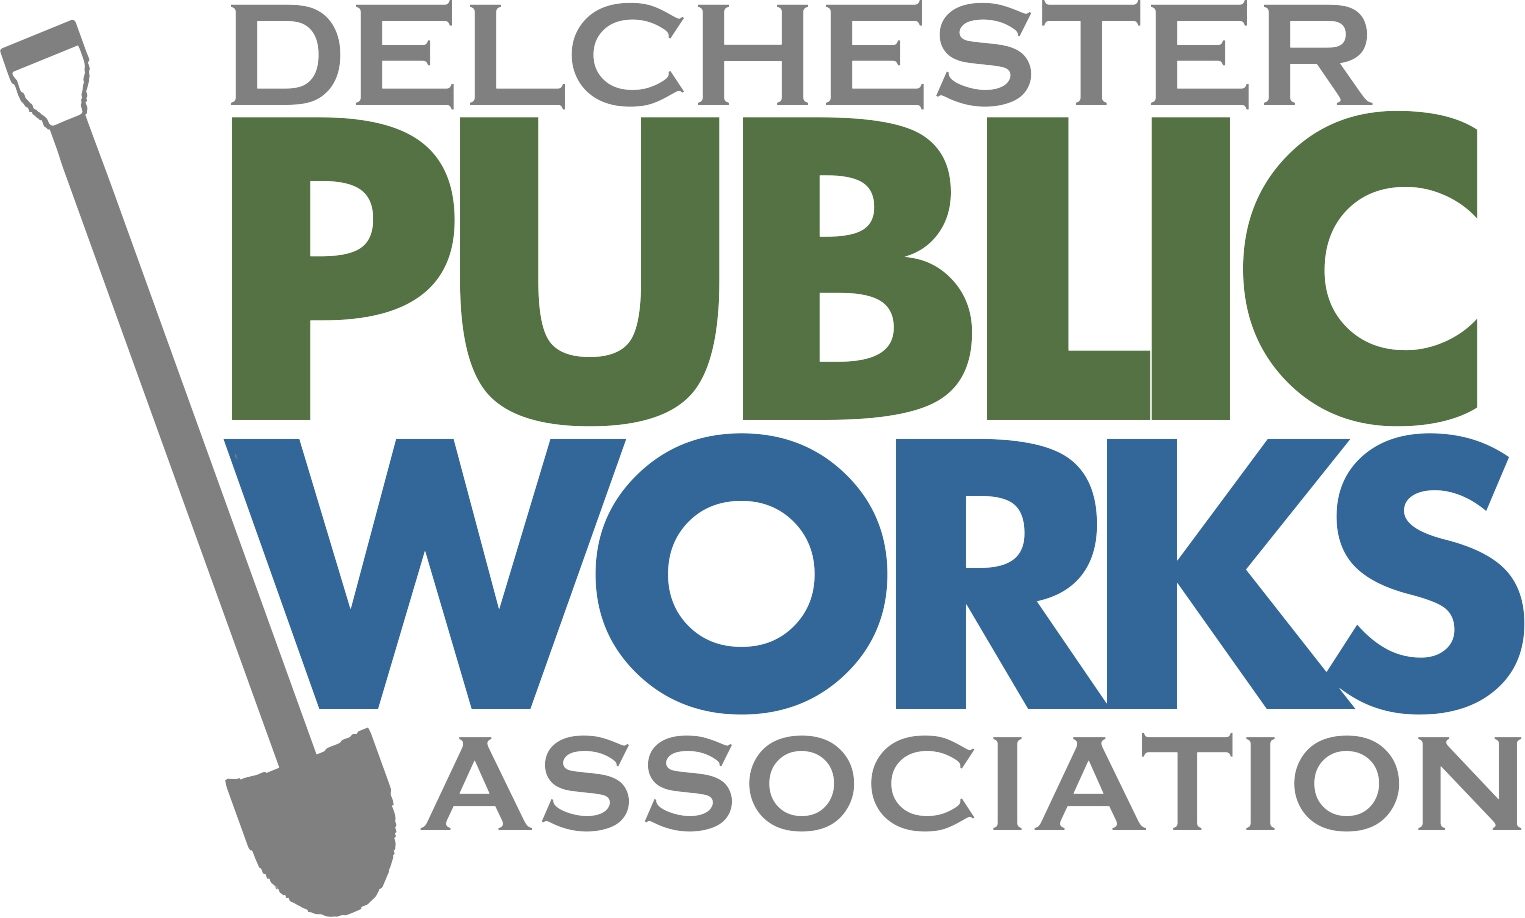 The DelChester Public Works Association logo